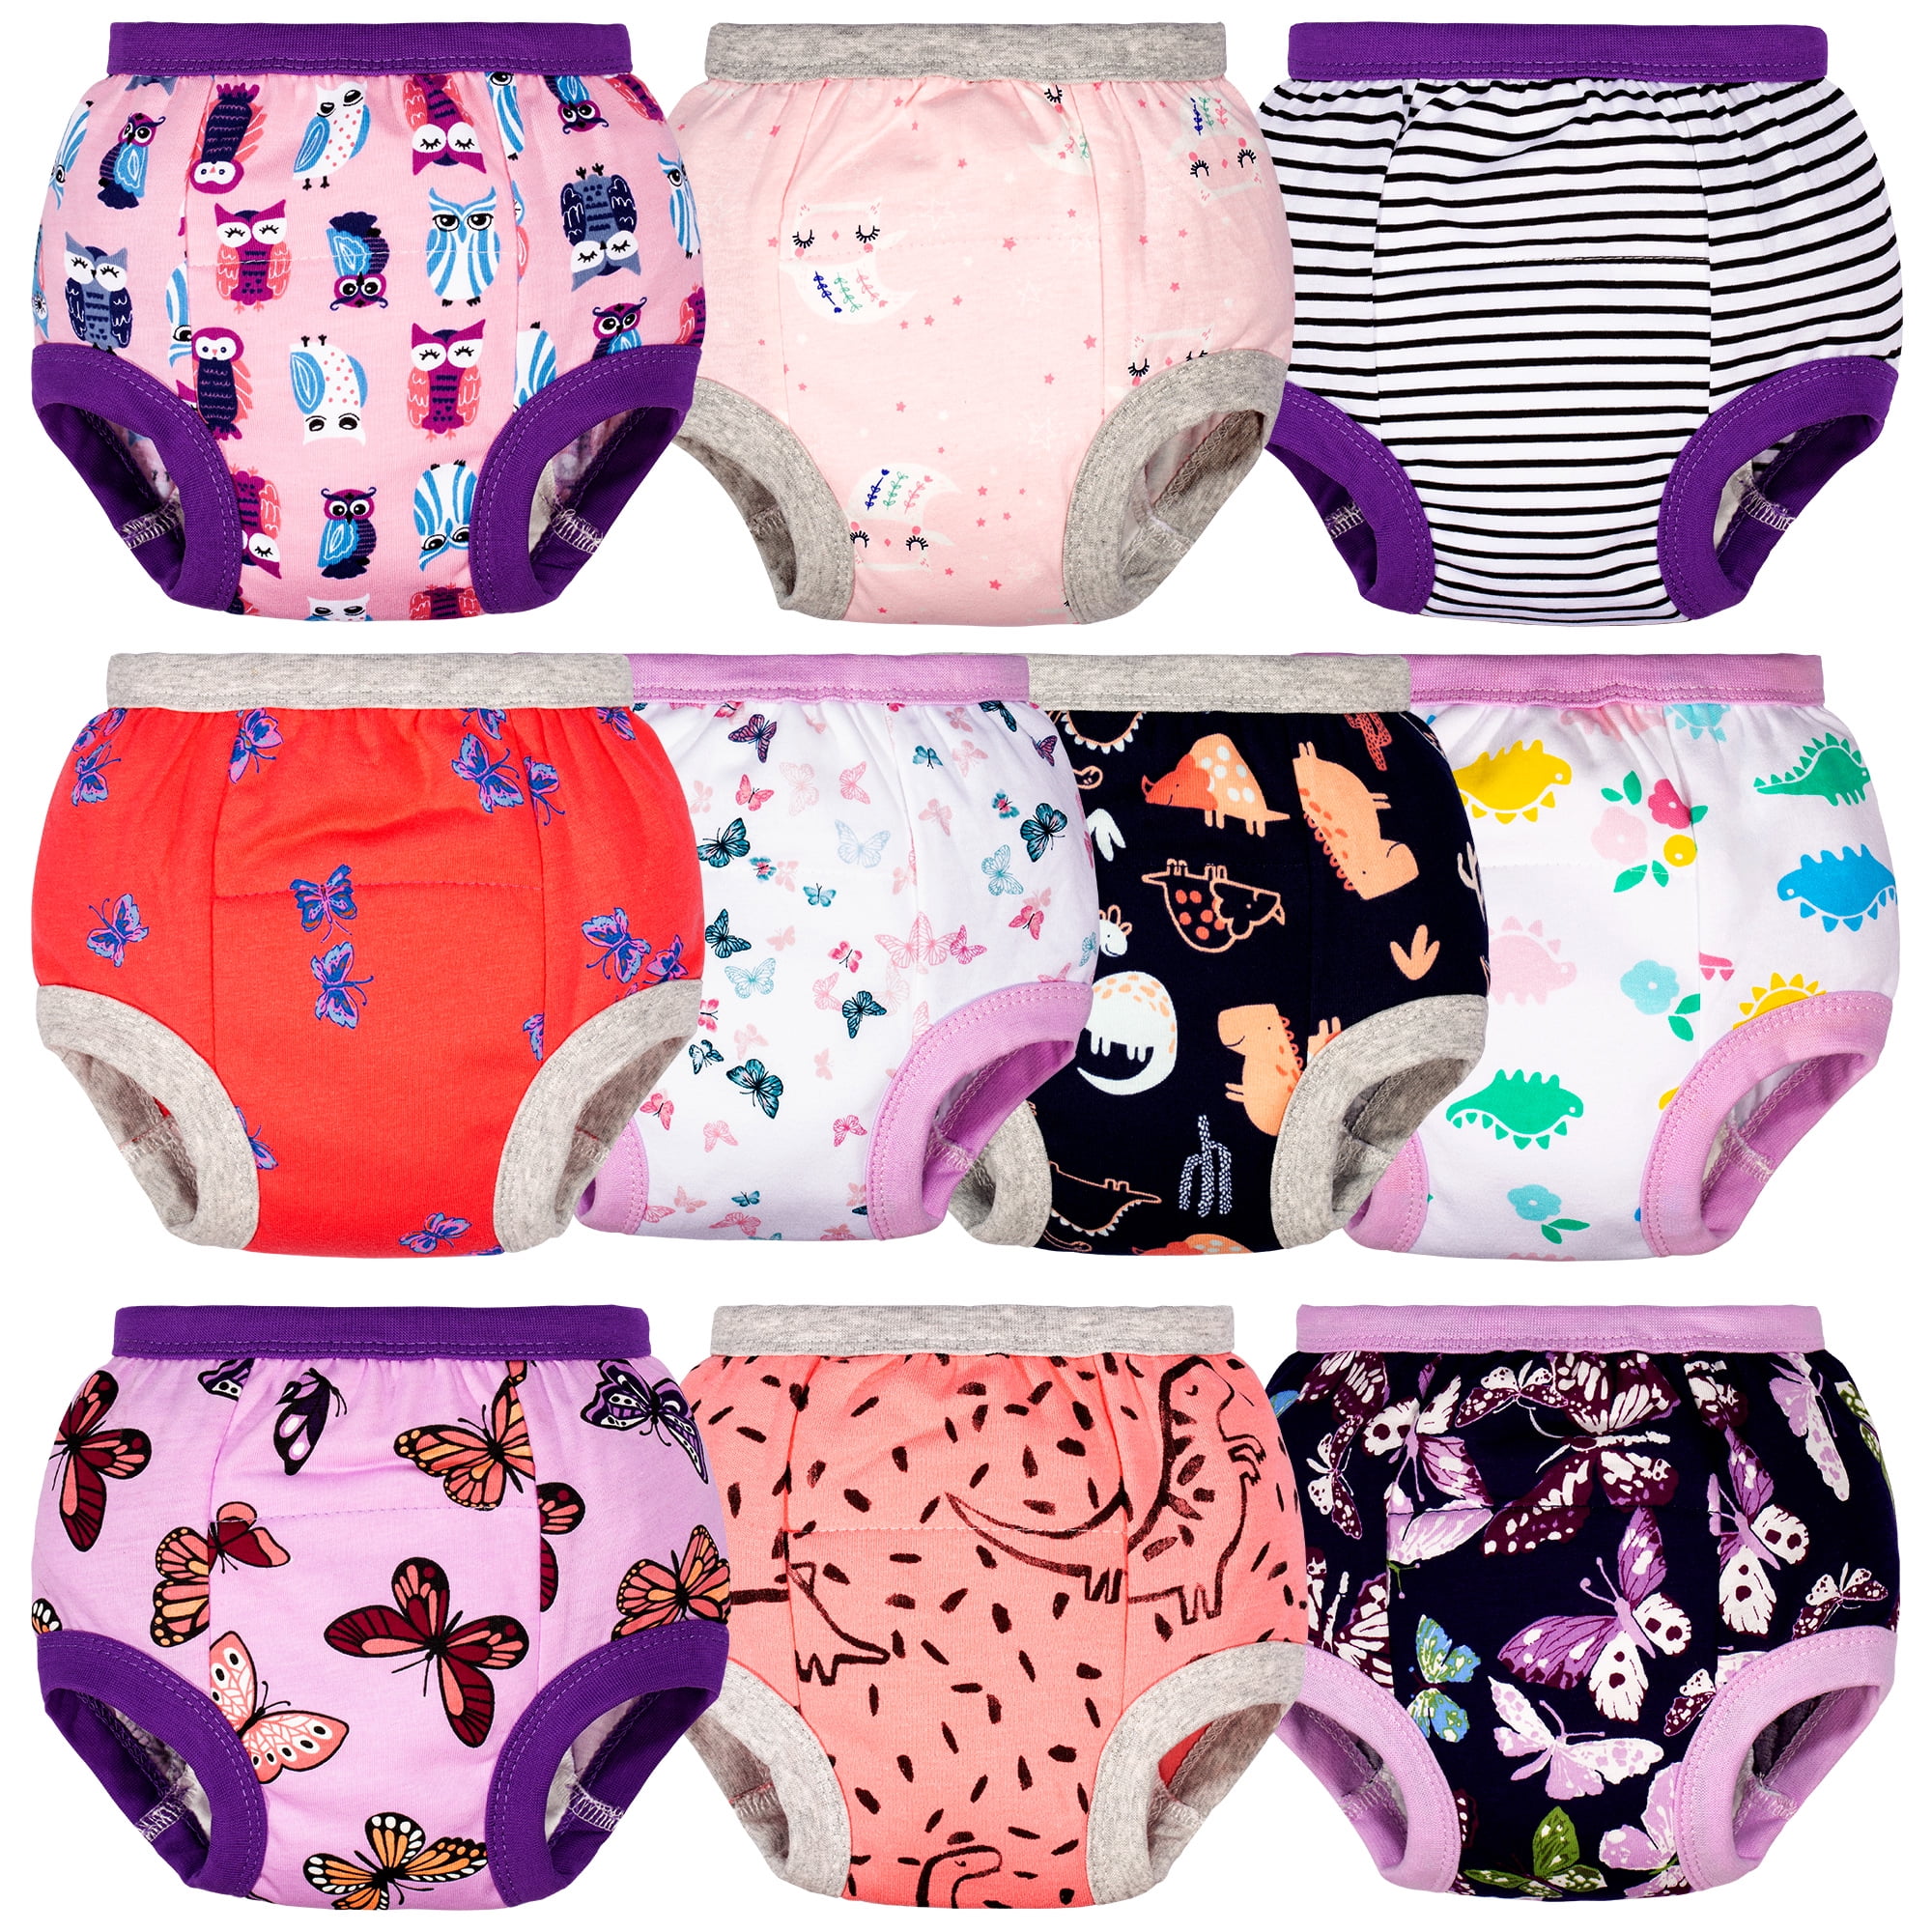 Elmo Potty Training Pants Underwear, 3-Pack (Toddler Girls